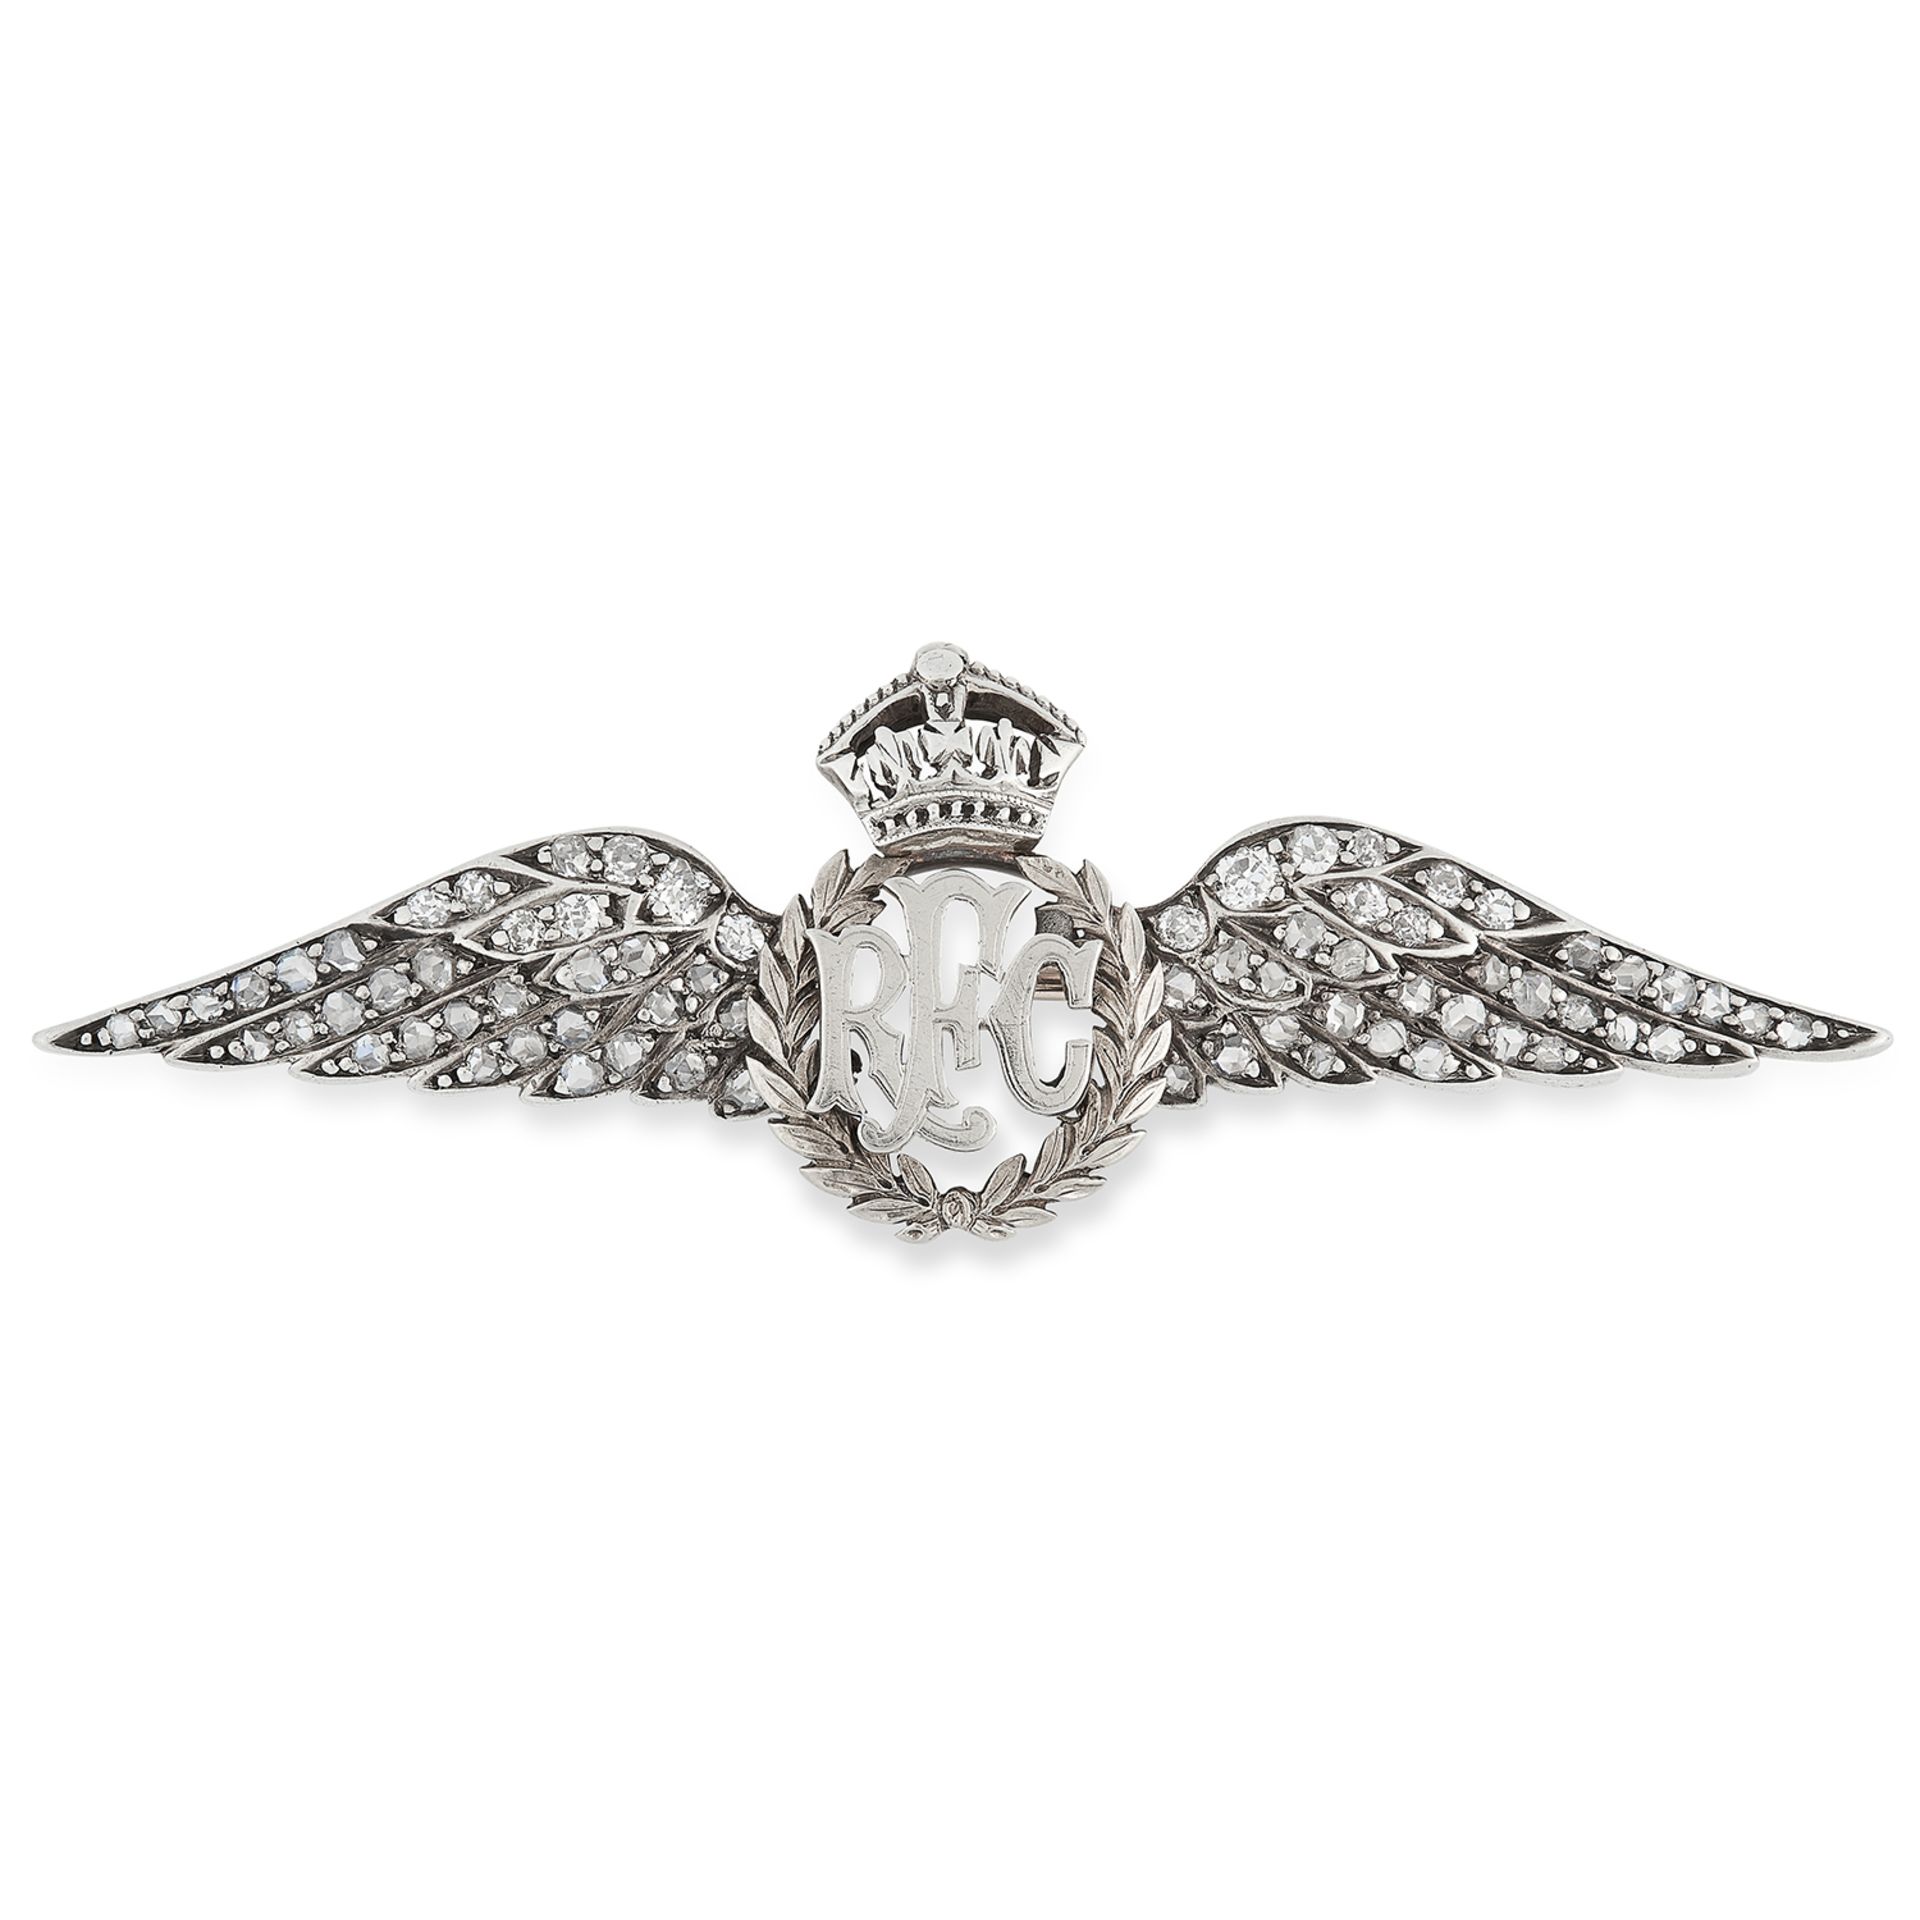 ANTIQUE REGIMENTAL ROYAL FLYING CORPS DIAMOND BROOCH set with rose cut diamonds, 6.9cm, 9.4g.